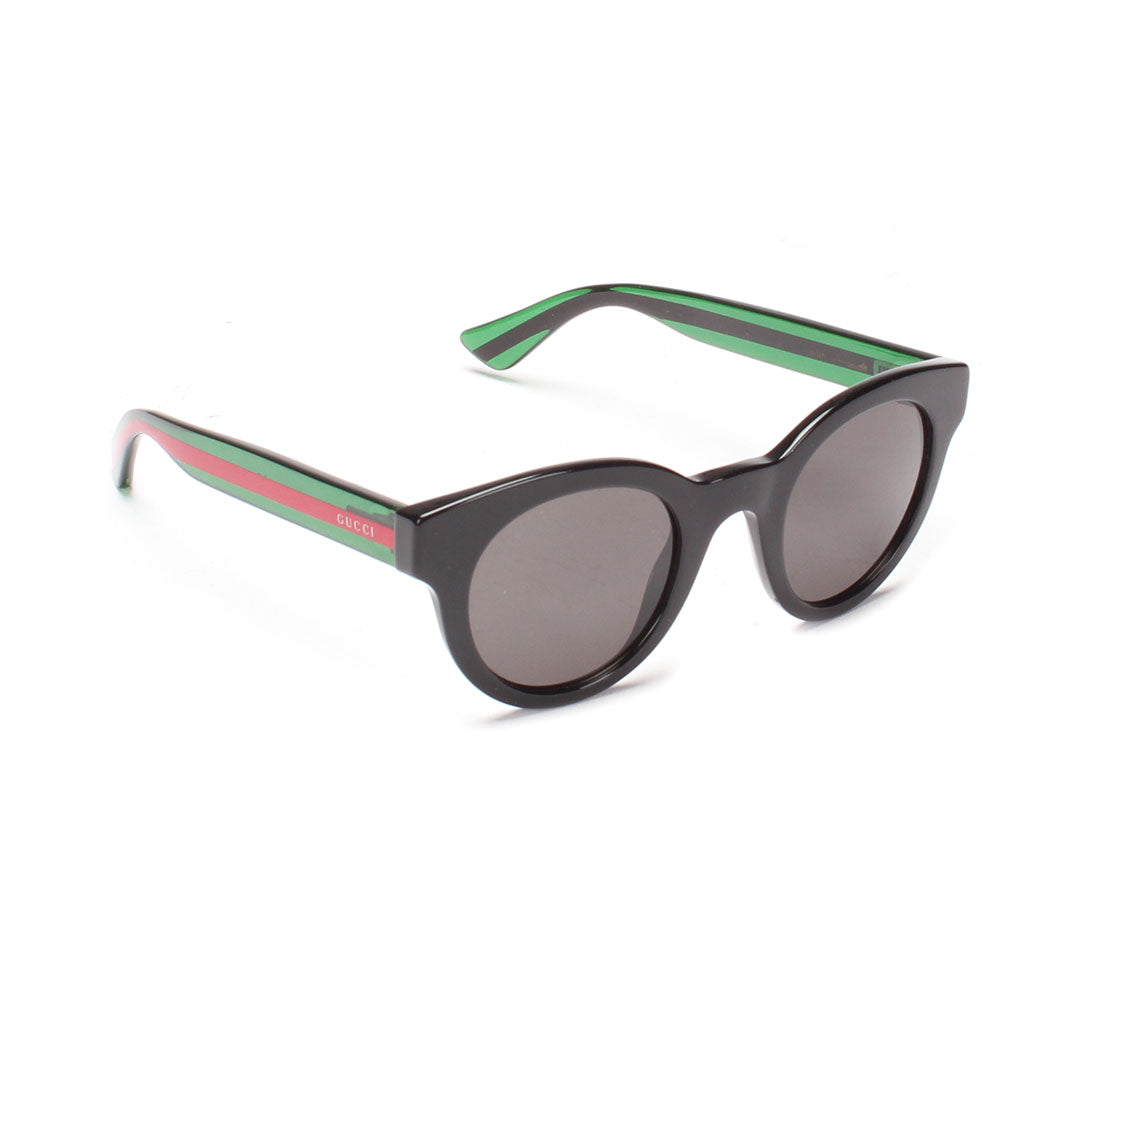 Tinted Sunglasses GG 0002